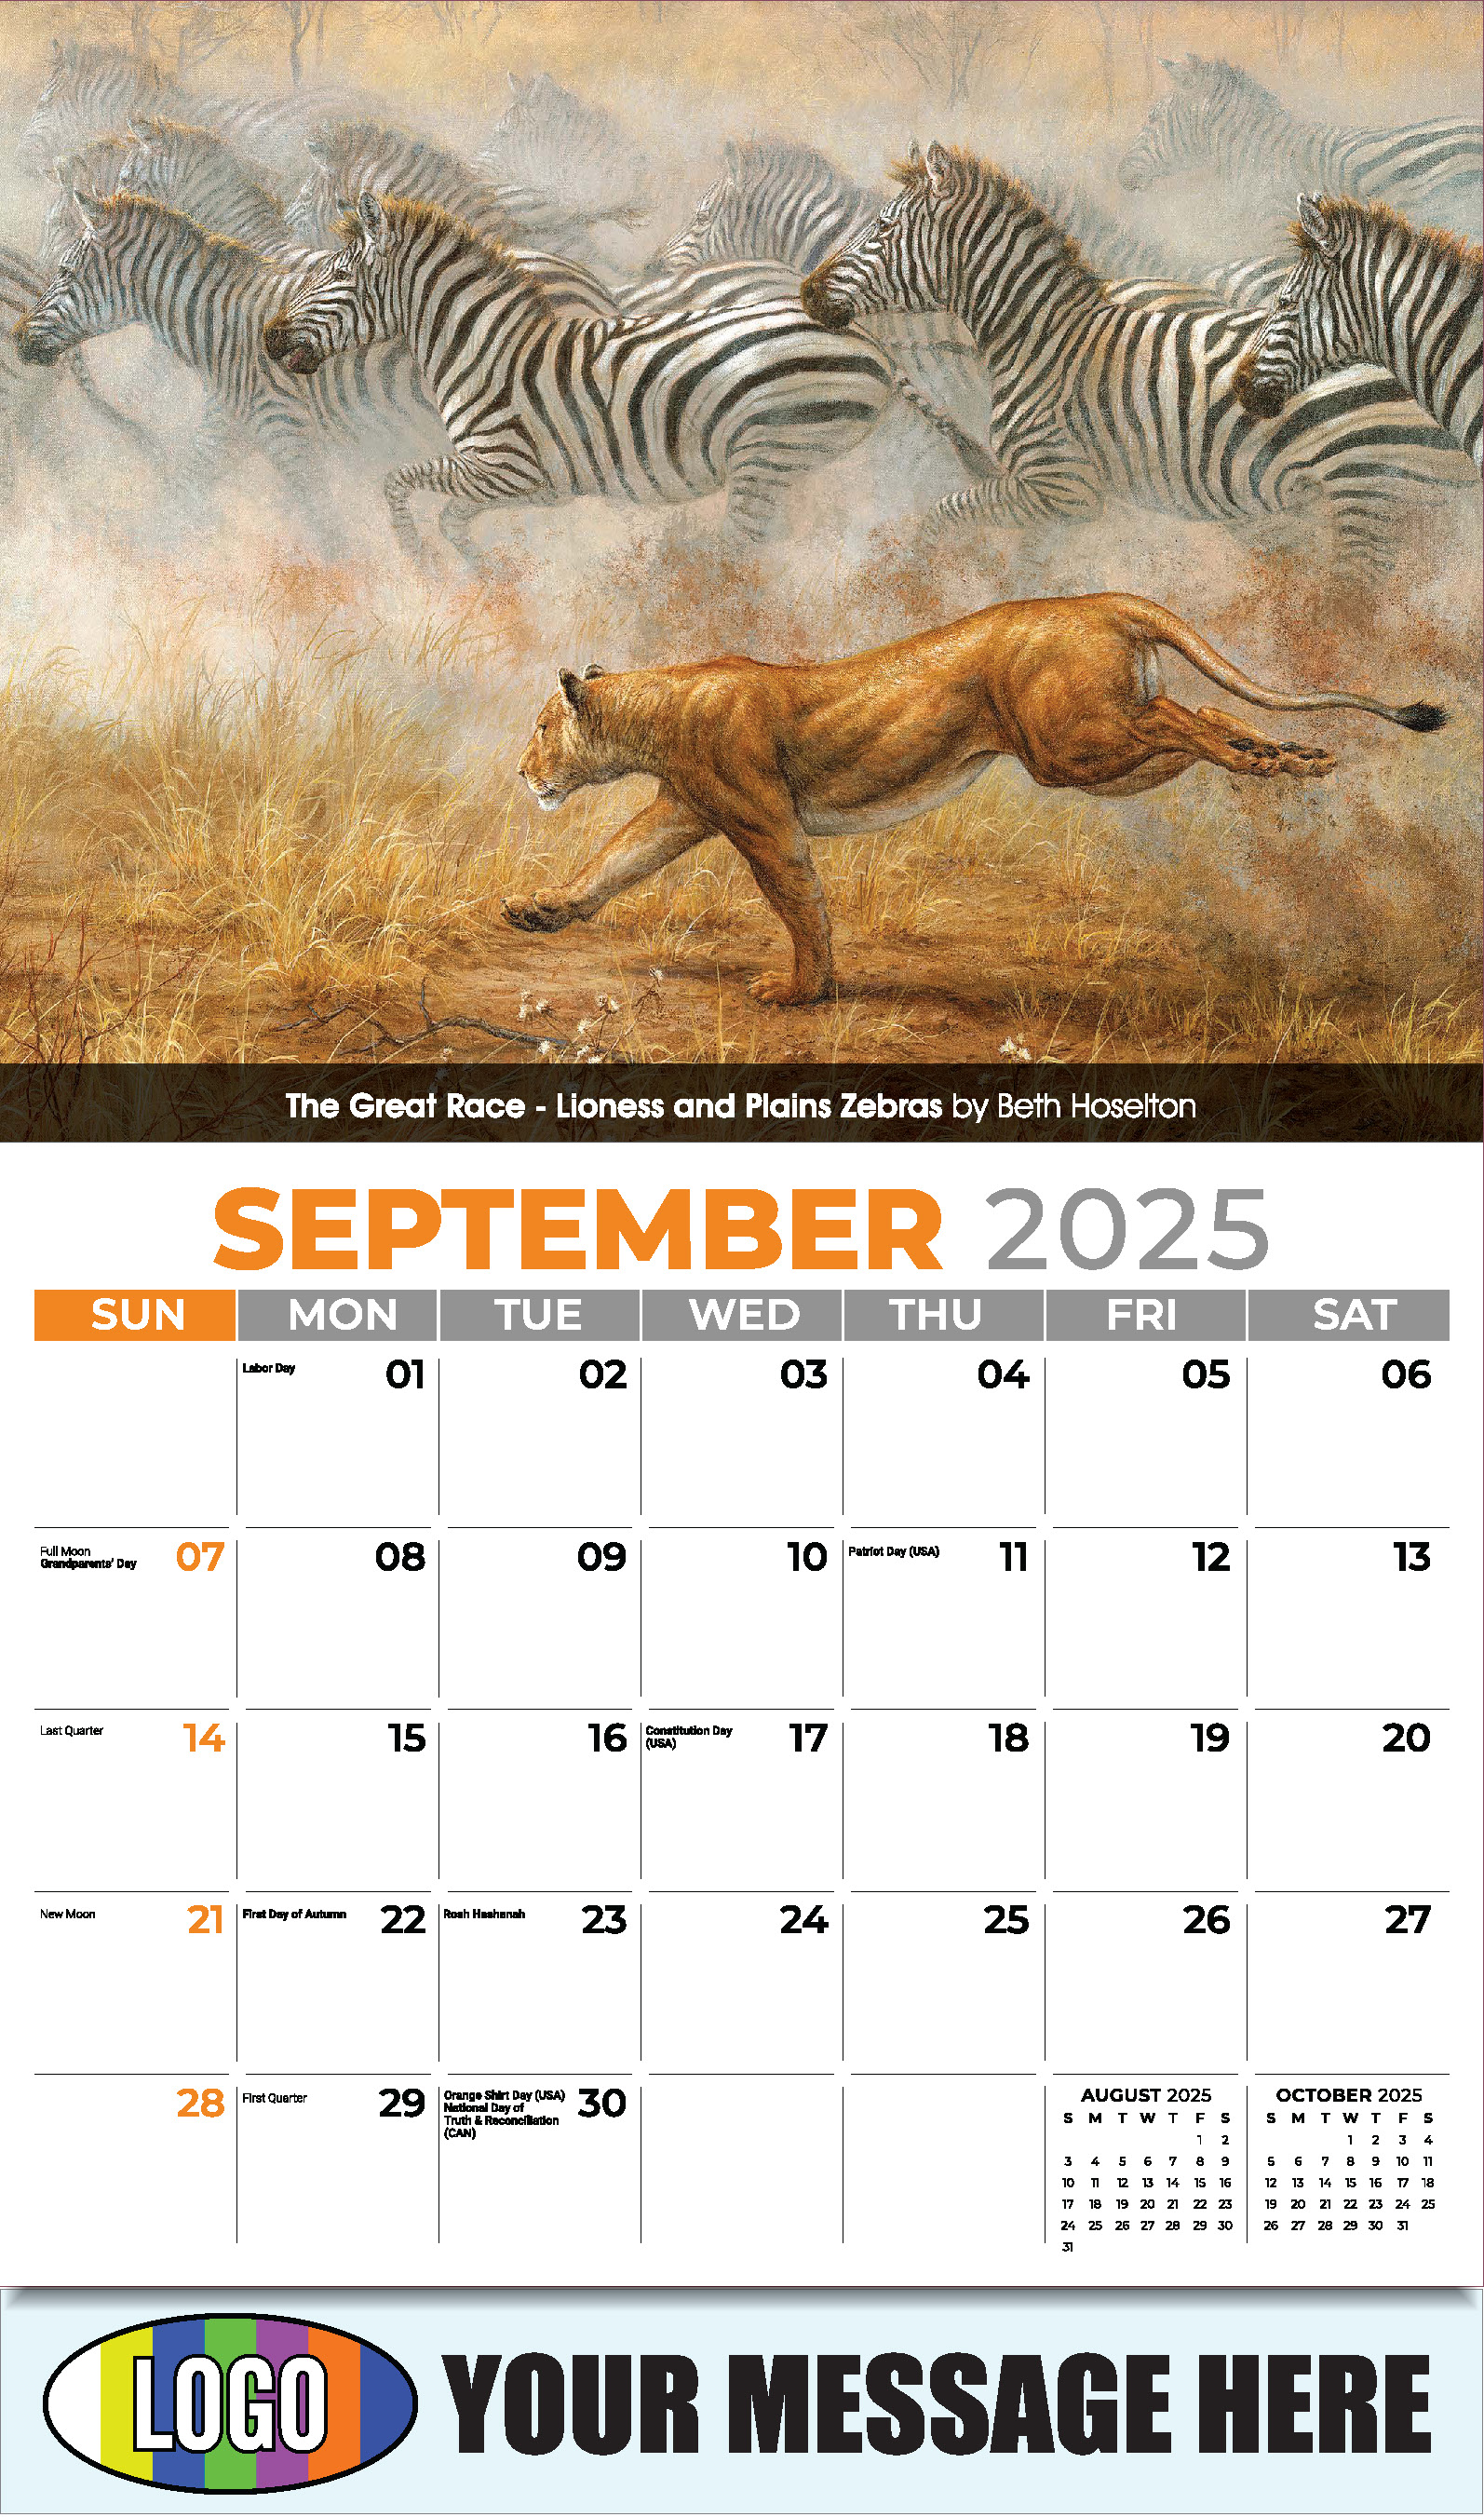 Wildlife Art Portraits 2025 Business Promotion Wall Calendar - September